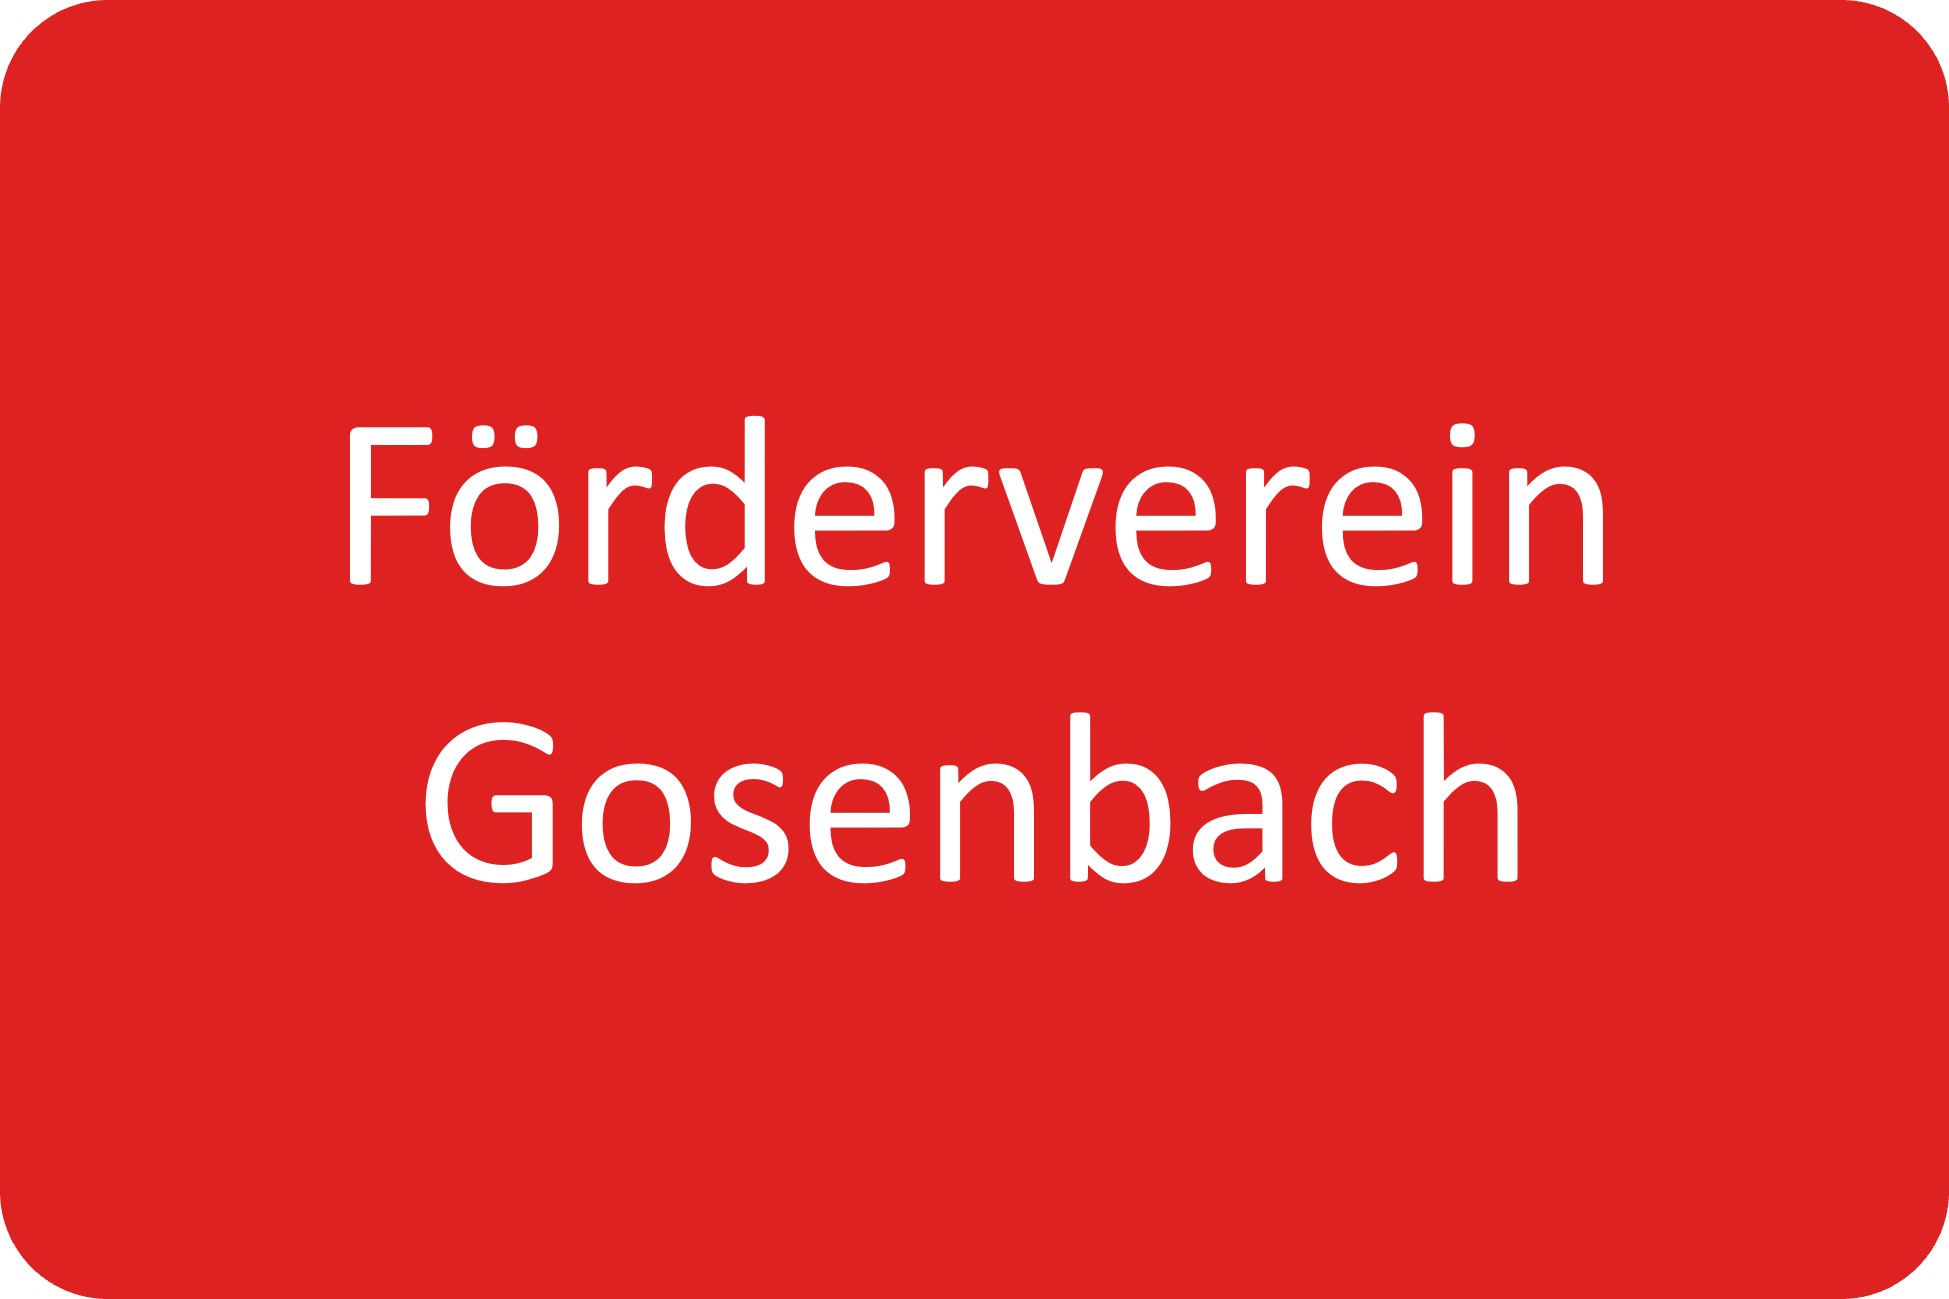 Förderverein Gosenbach